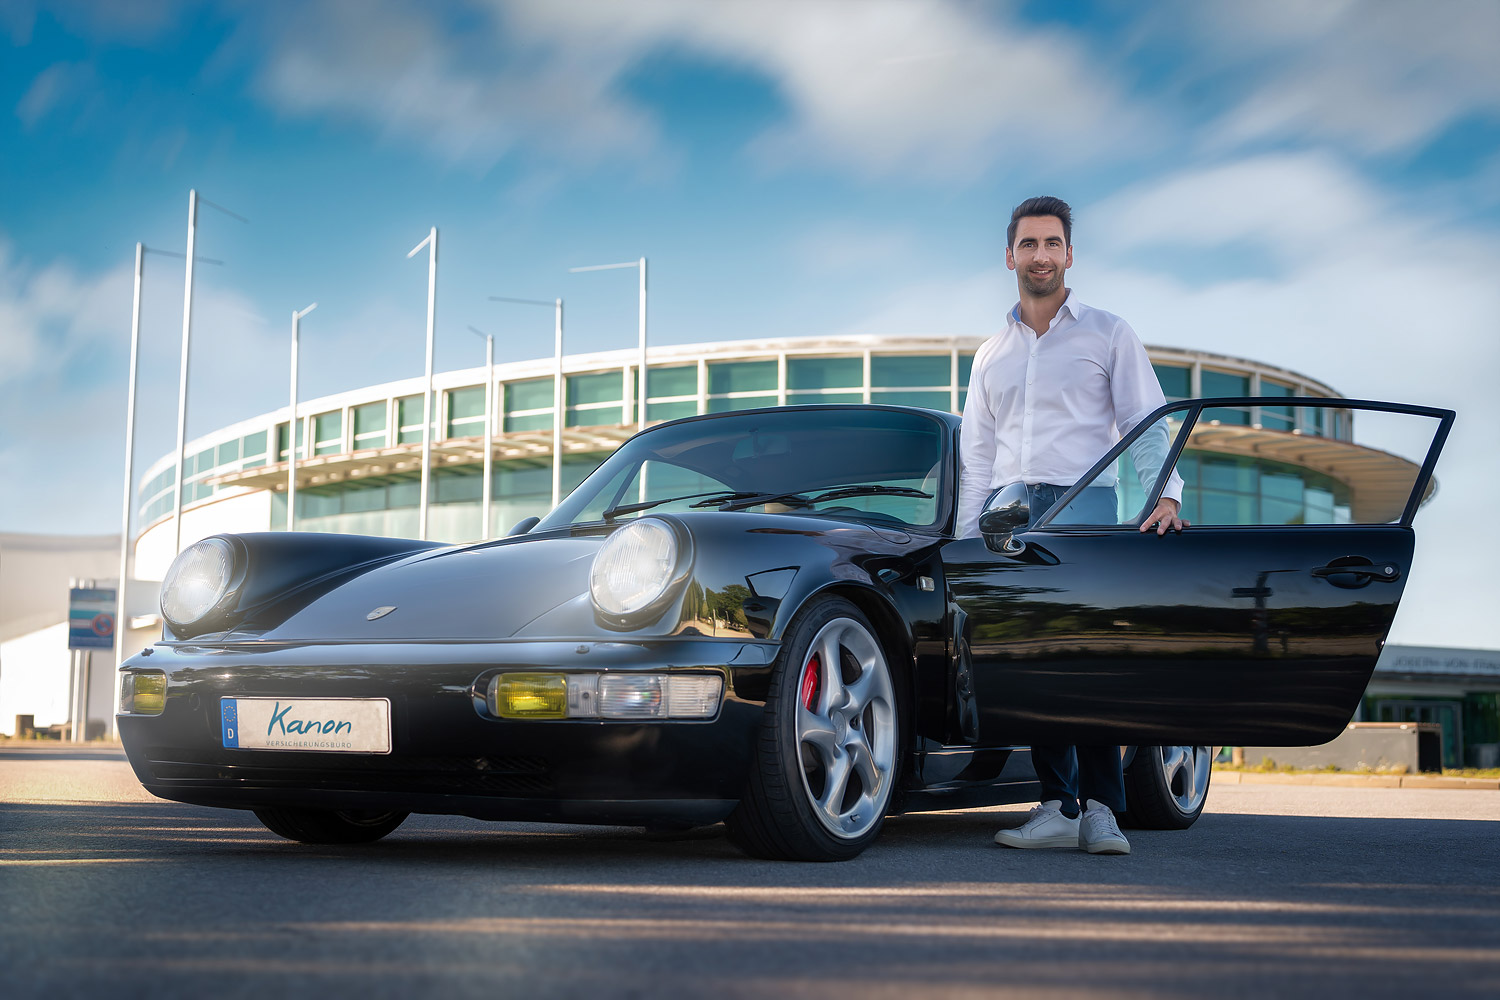 Business Fotoshooting - Kanon Versicherung - Porsche